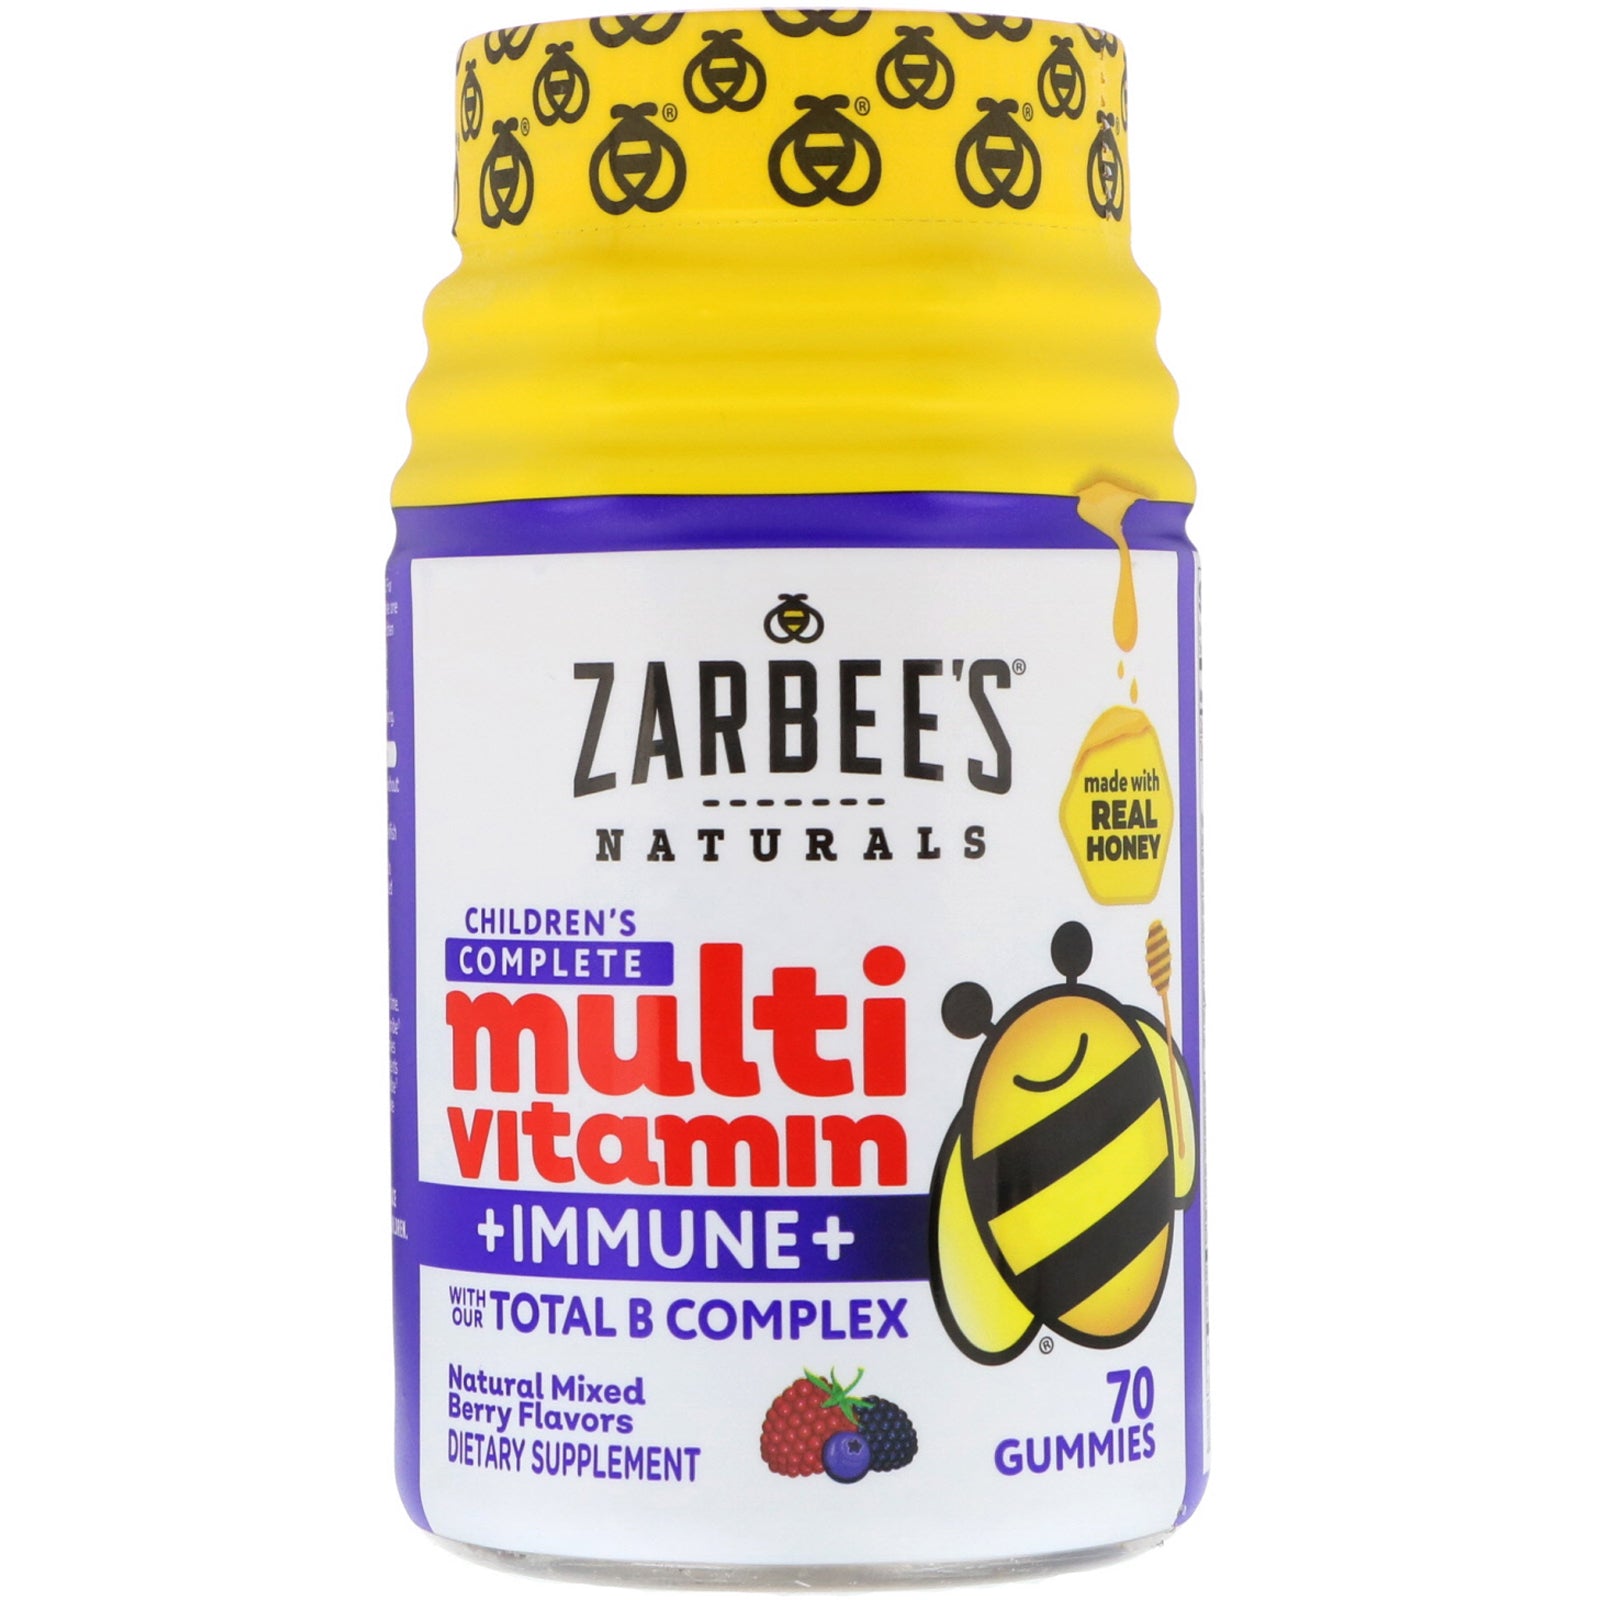 Zarbee's Multivitamin + Immune